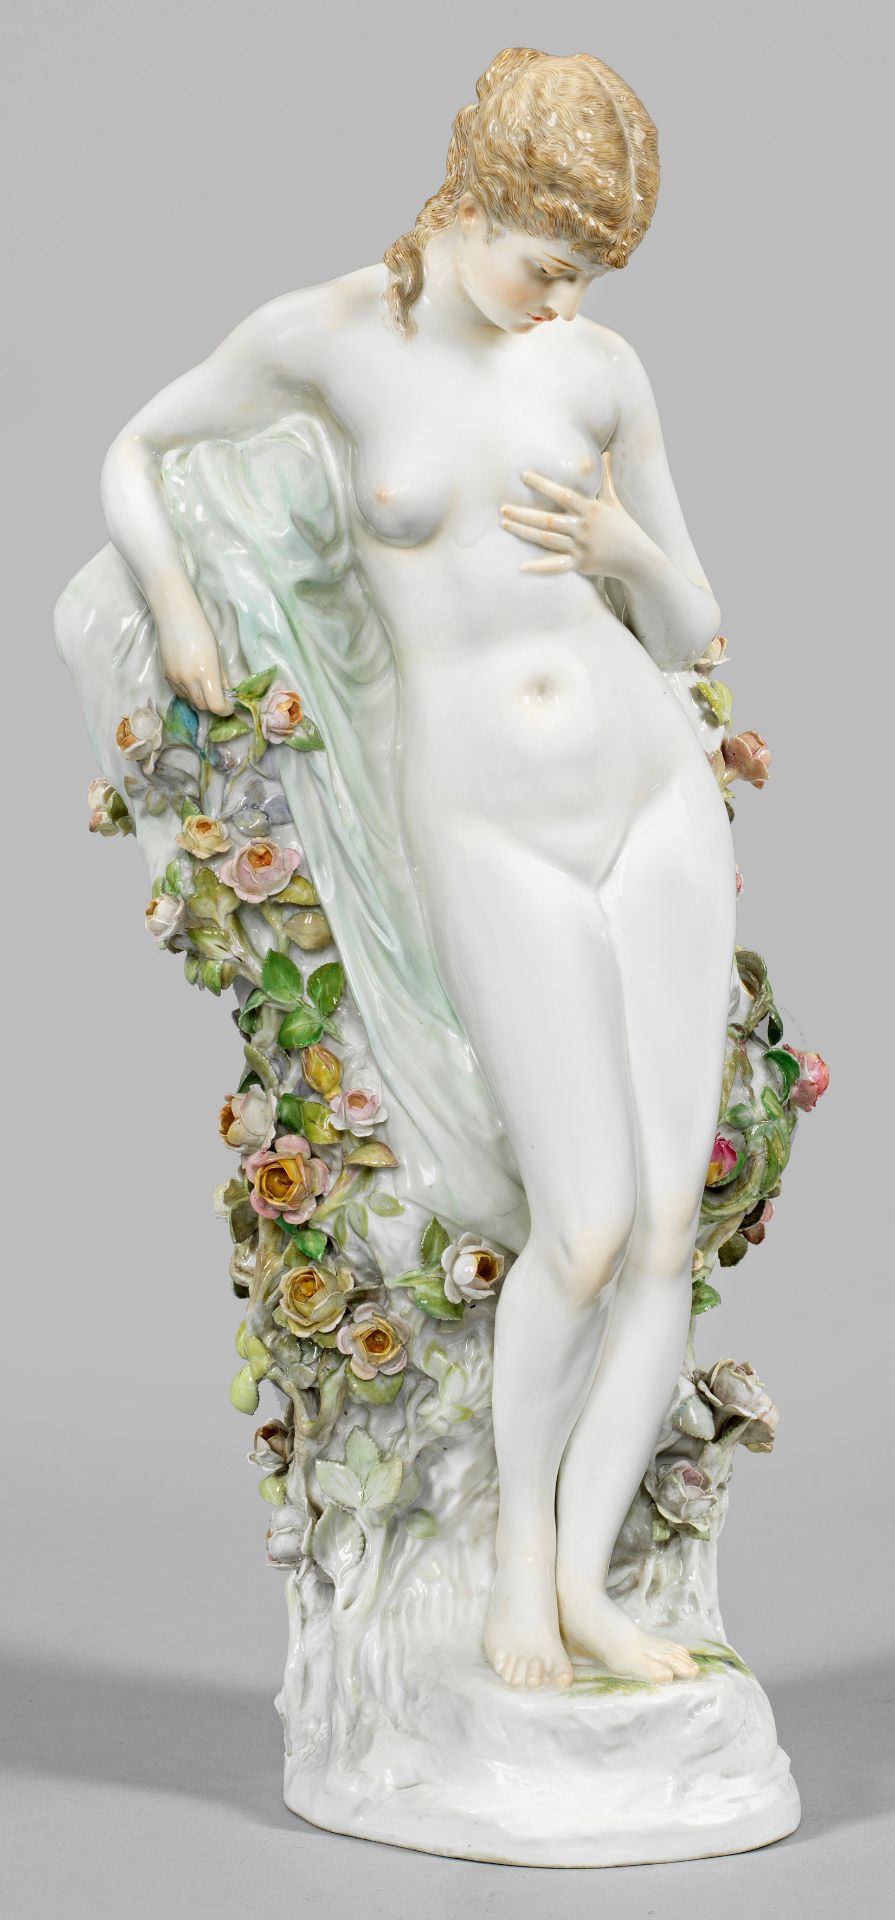 Seltene Meissen Jugendstil-Figur "Erblüht". Originaltitel